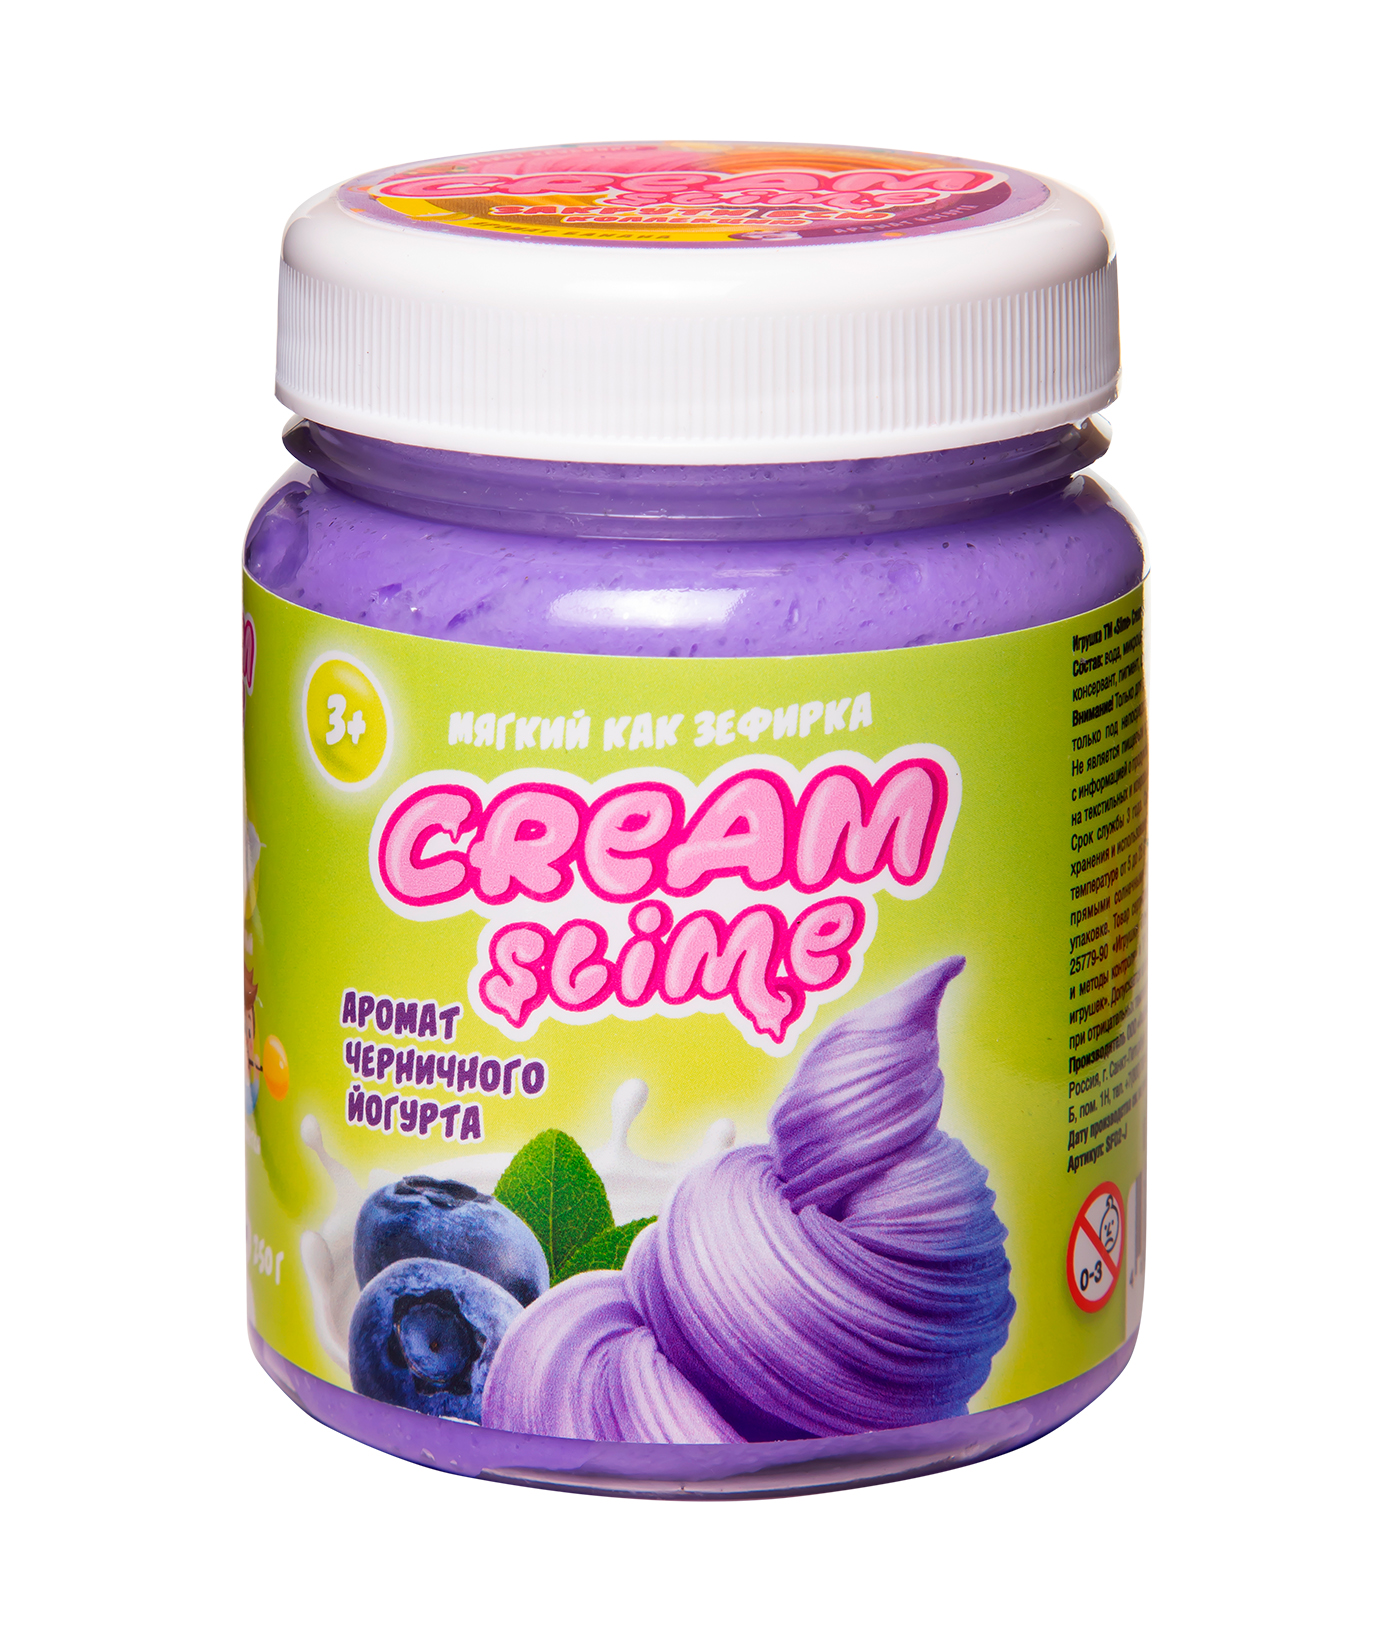 Слайм Cream с ароматом черничного йогурта, 250 г Slime игрушка тм slime cream slime с ароматом черничного йогурта 250 г